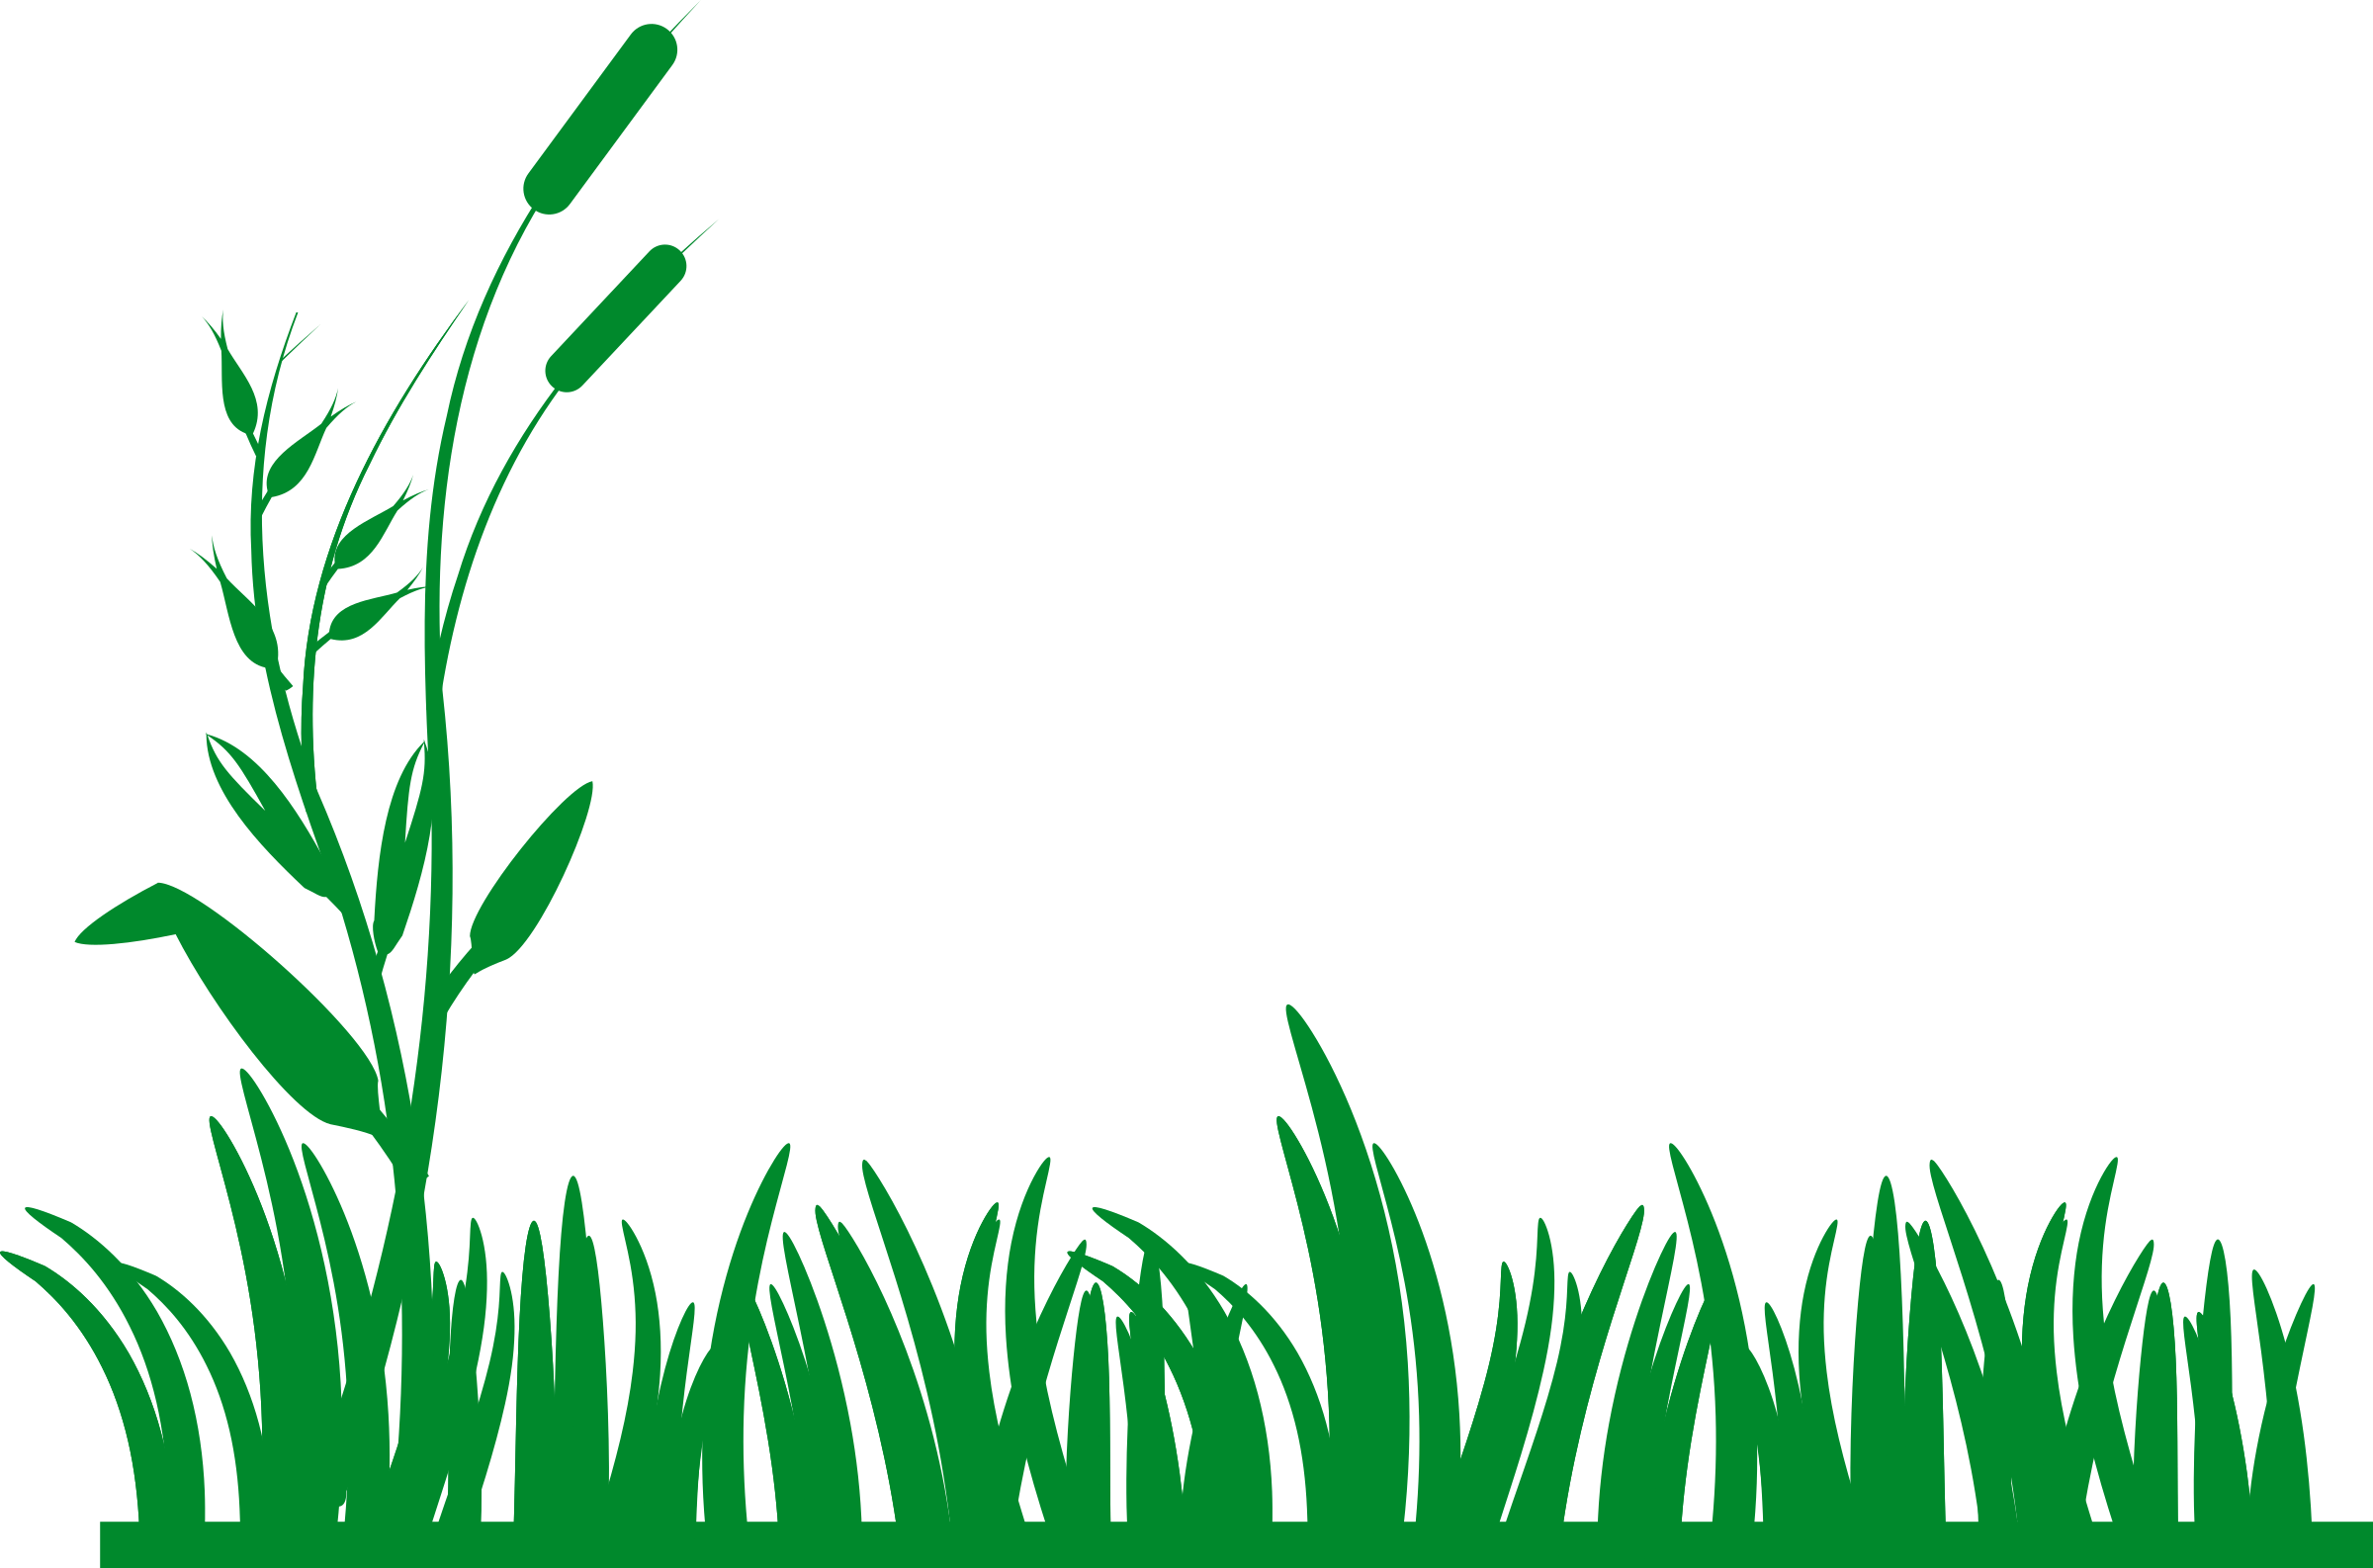 Planting grass